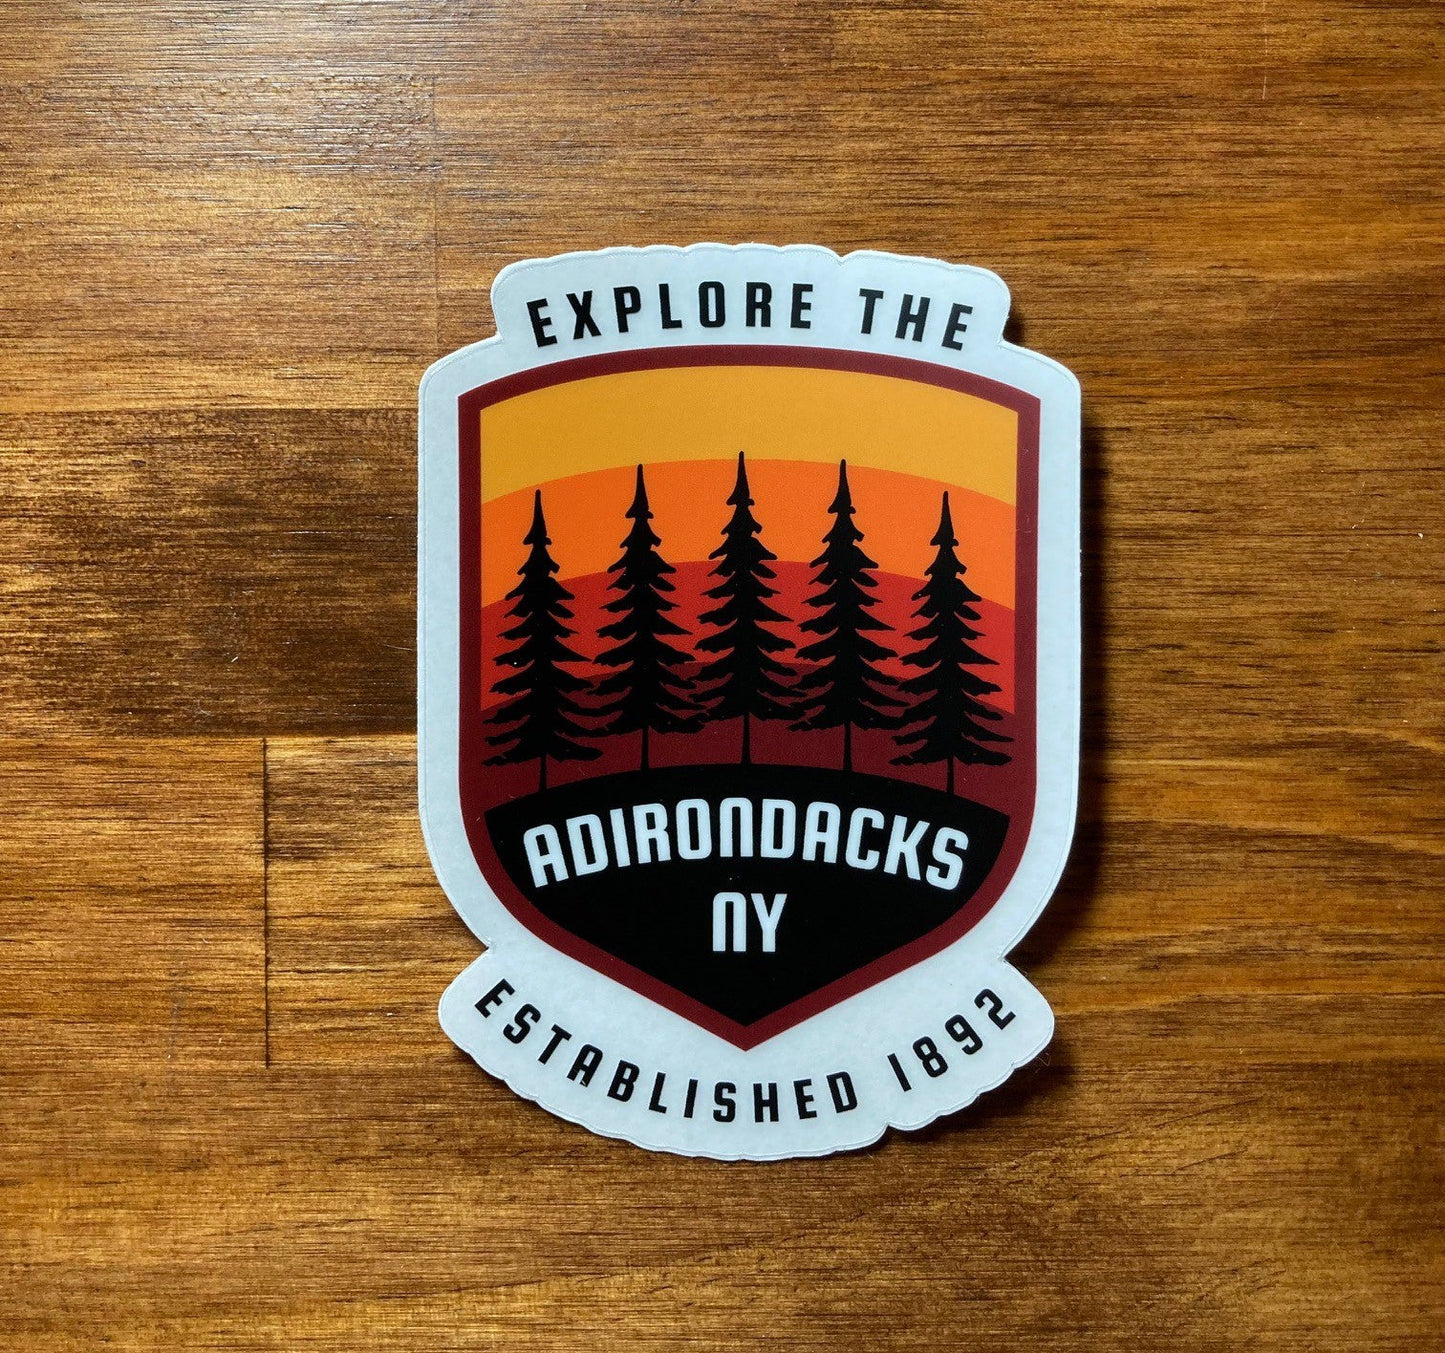 Explore the Adirondacks Stickers - 3 Pack